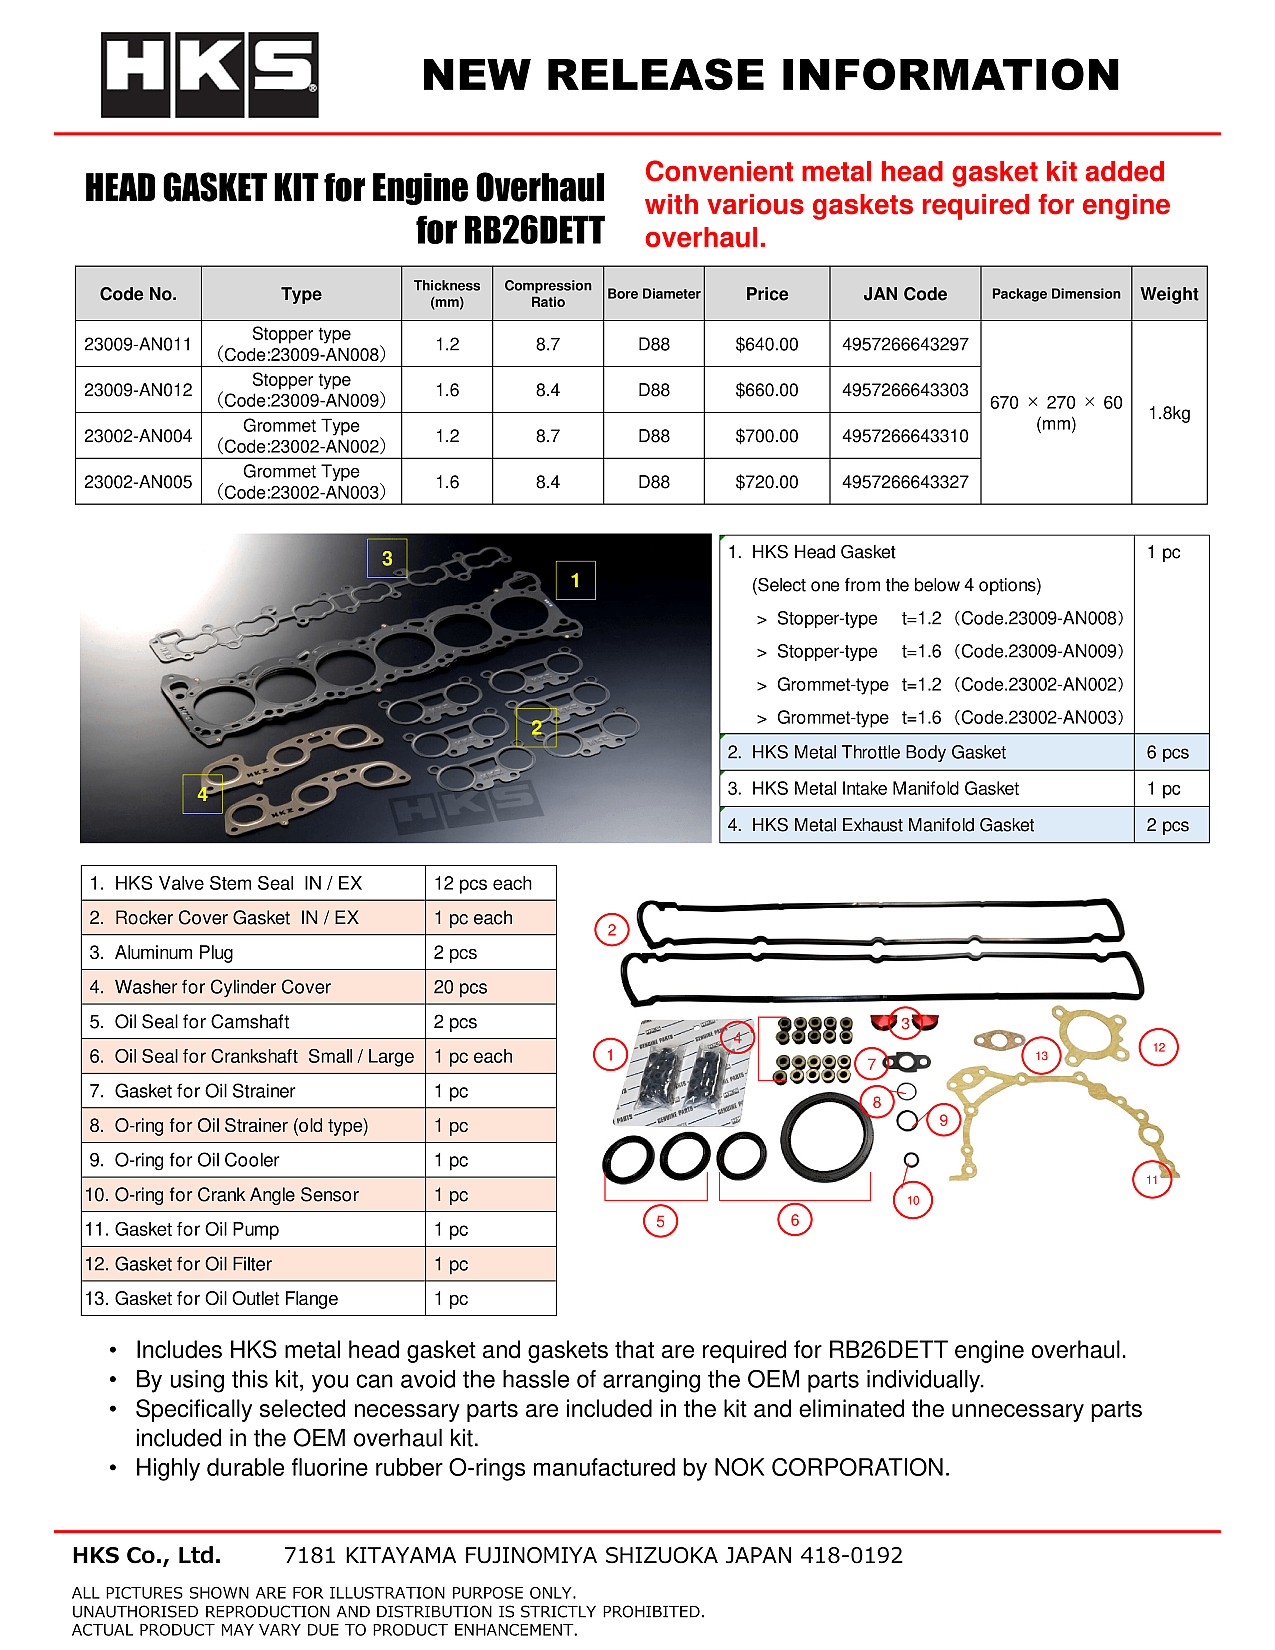 23002-AN004 Head Gasket Kit for RB26DETT Overhaul.png